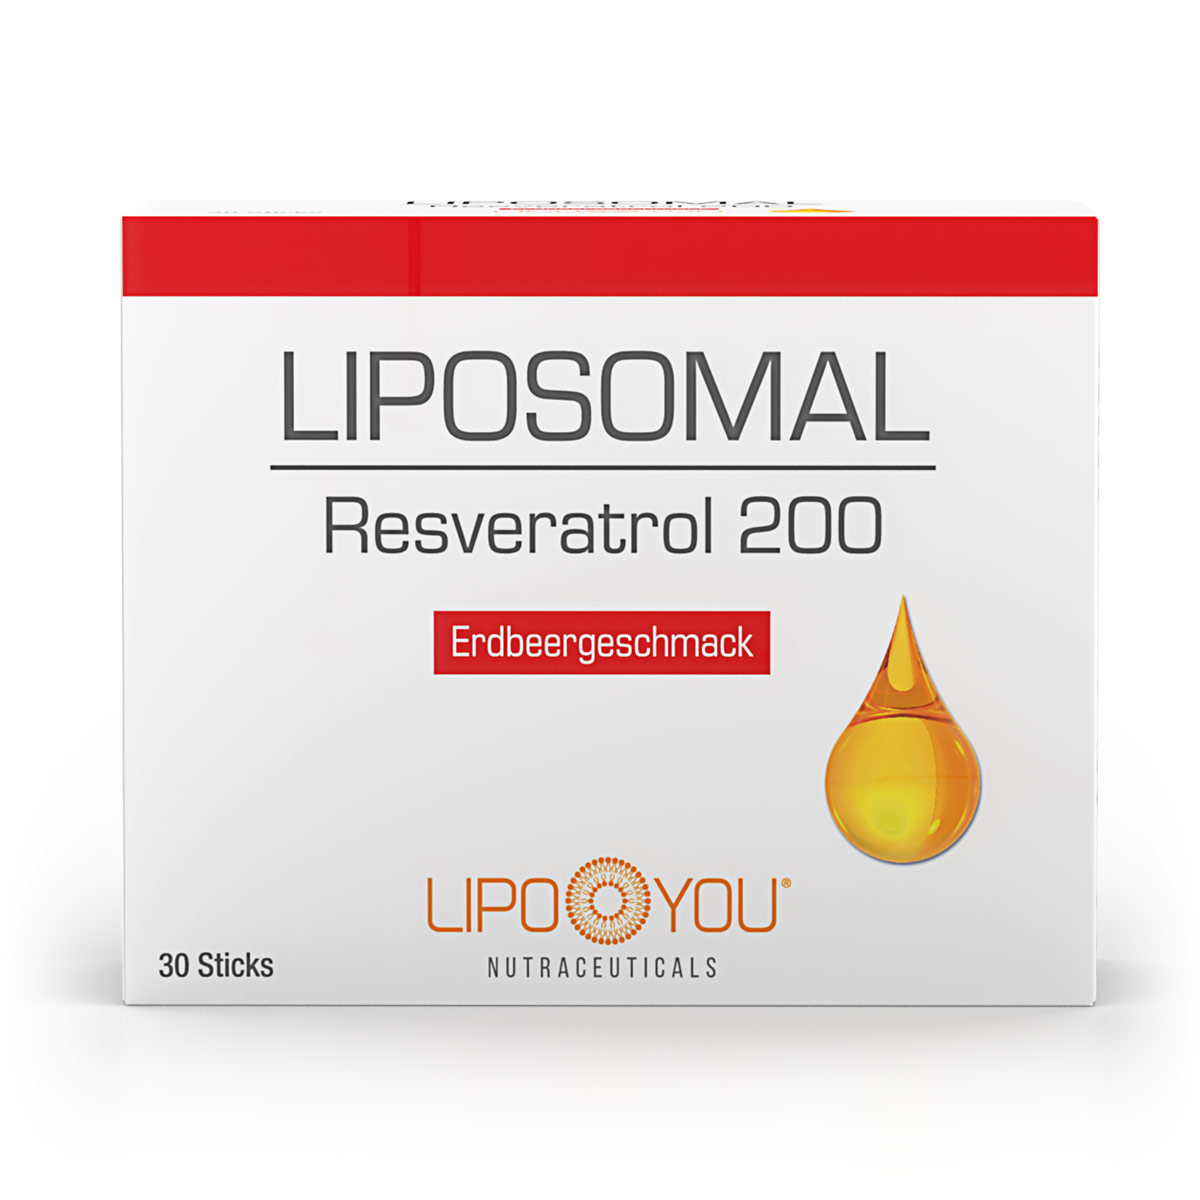 LIPOSOMAL Resveratrol 200 Produktverpackung